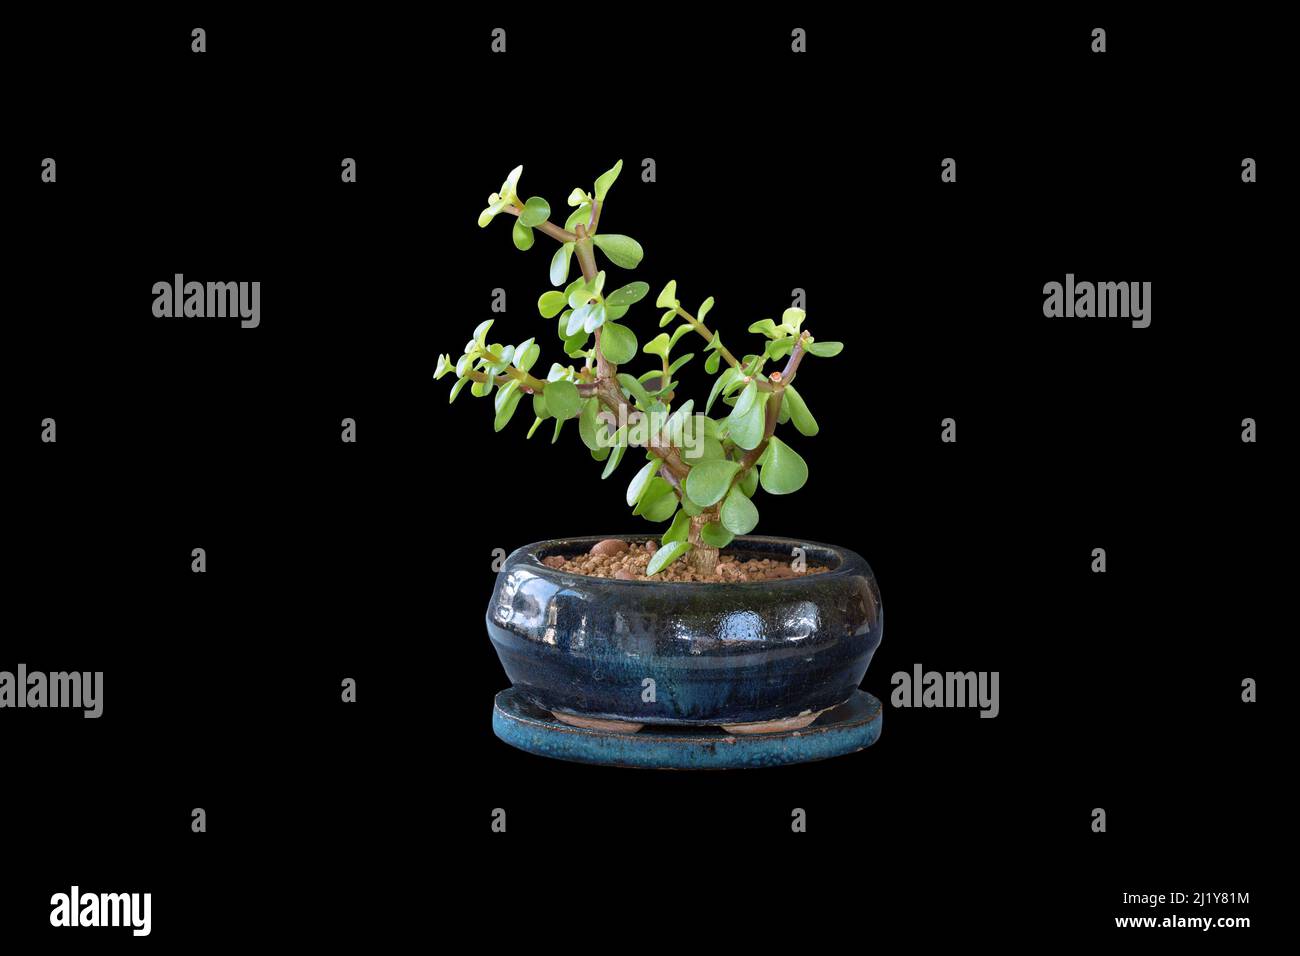 Portulacaria afla bonsai on dark background, the money tree planted in a ceramic pot Stock Photo